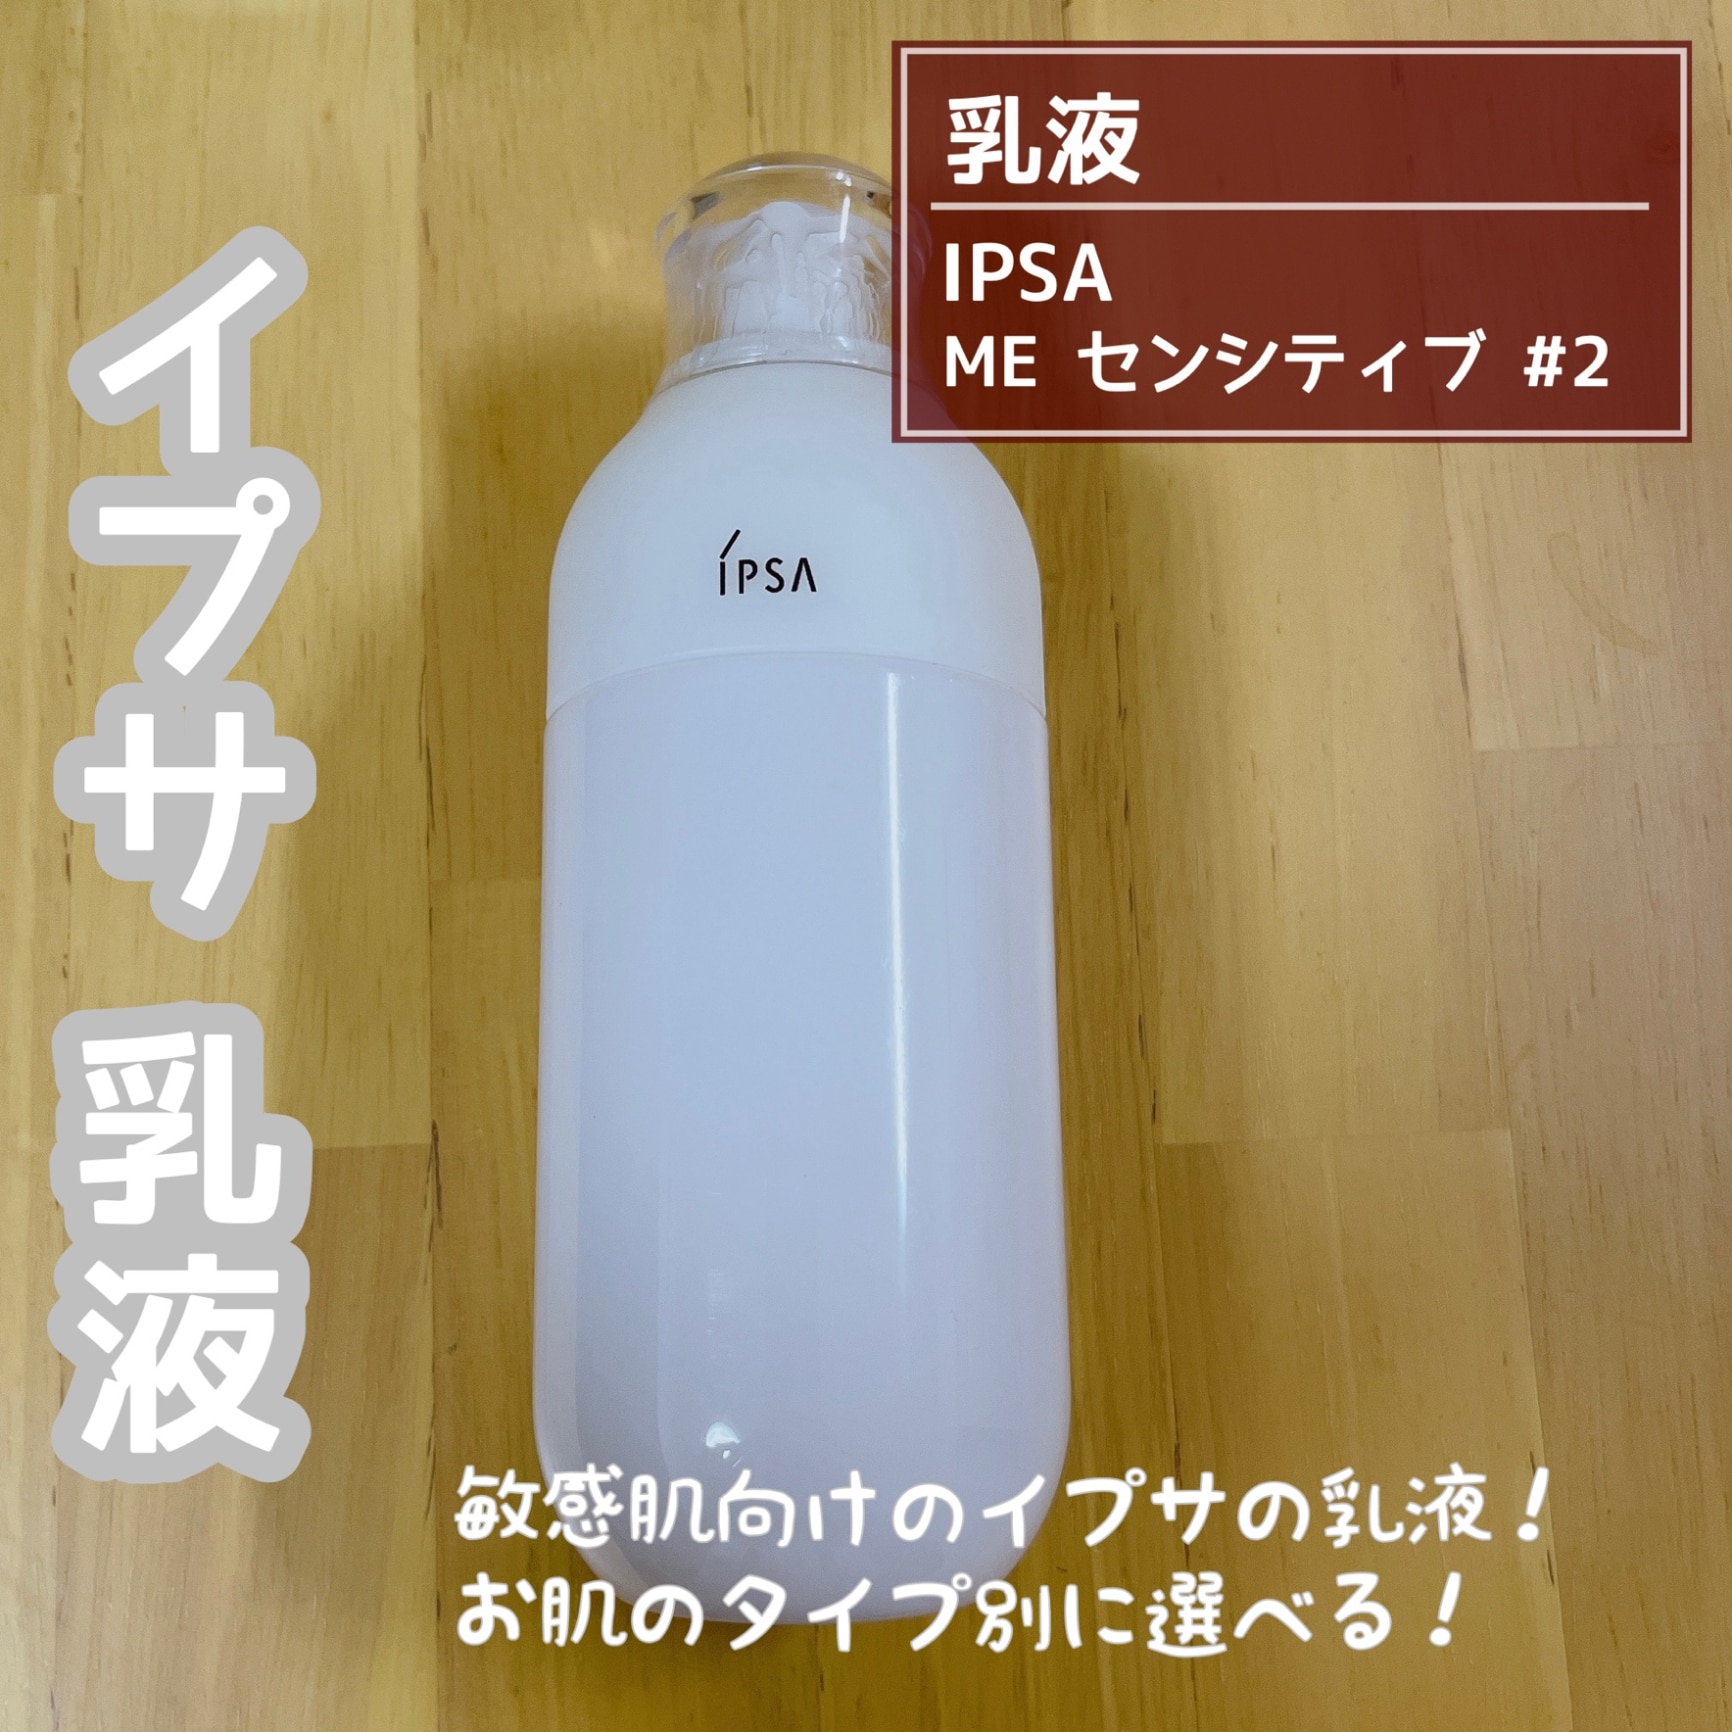 IPSA ME2 化粧液 ミニサイズ - 乳液・ミルク